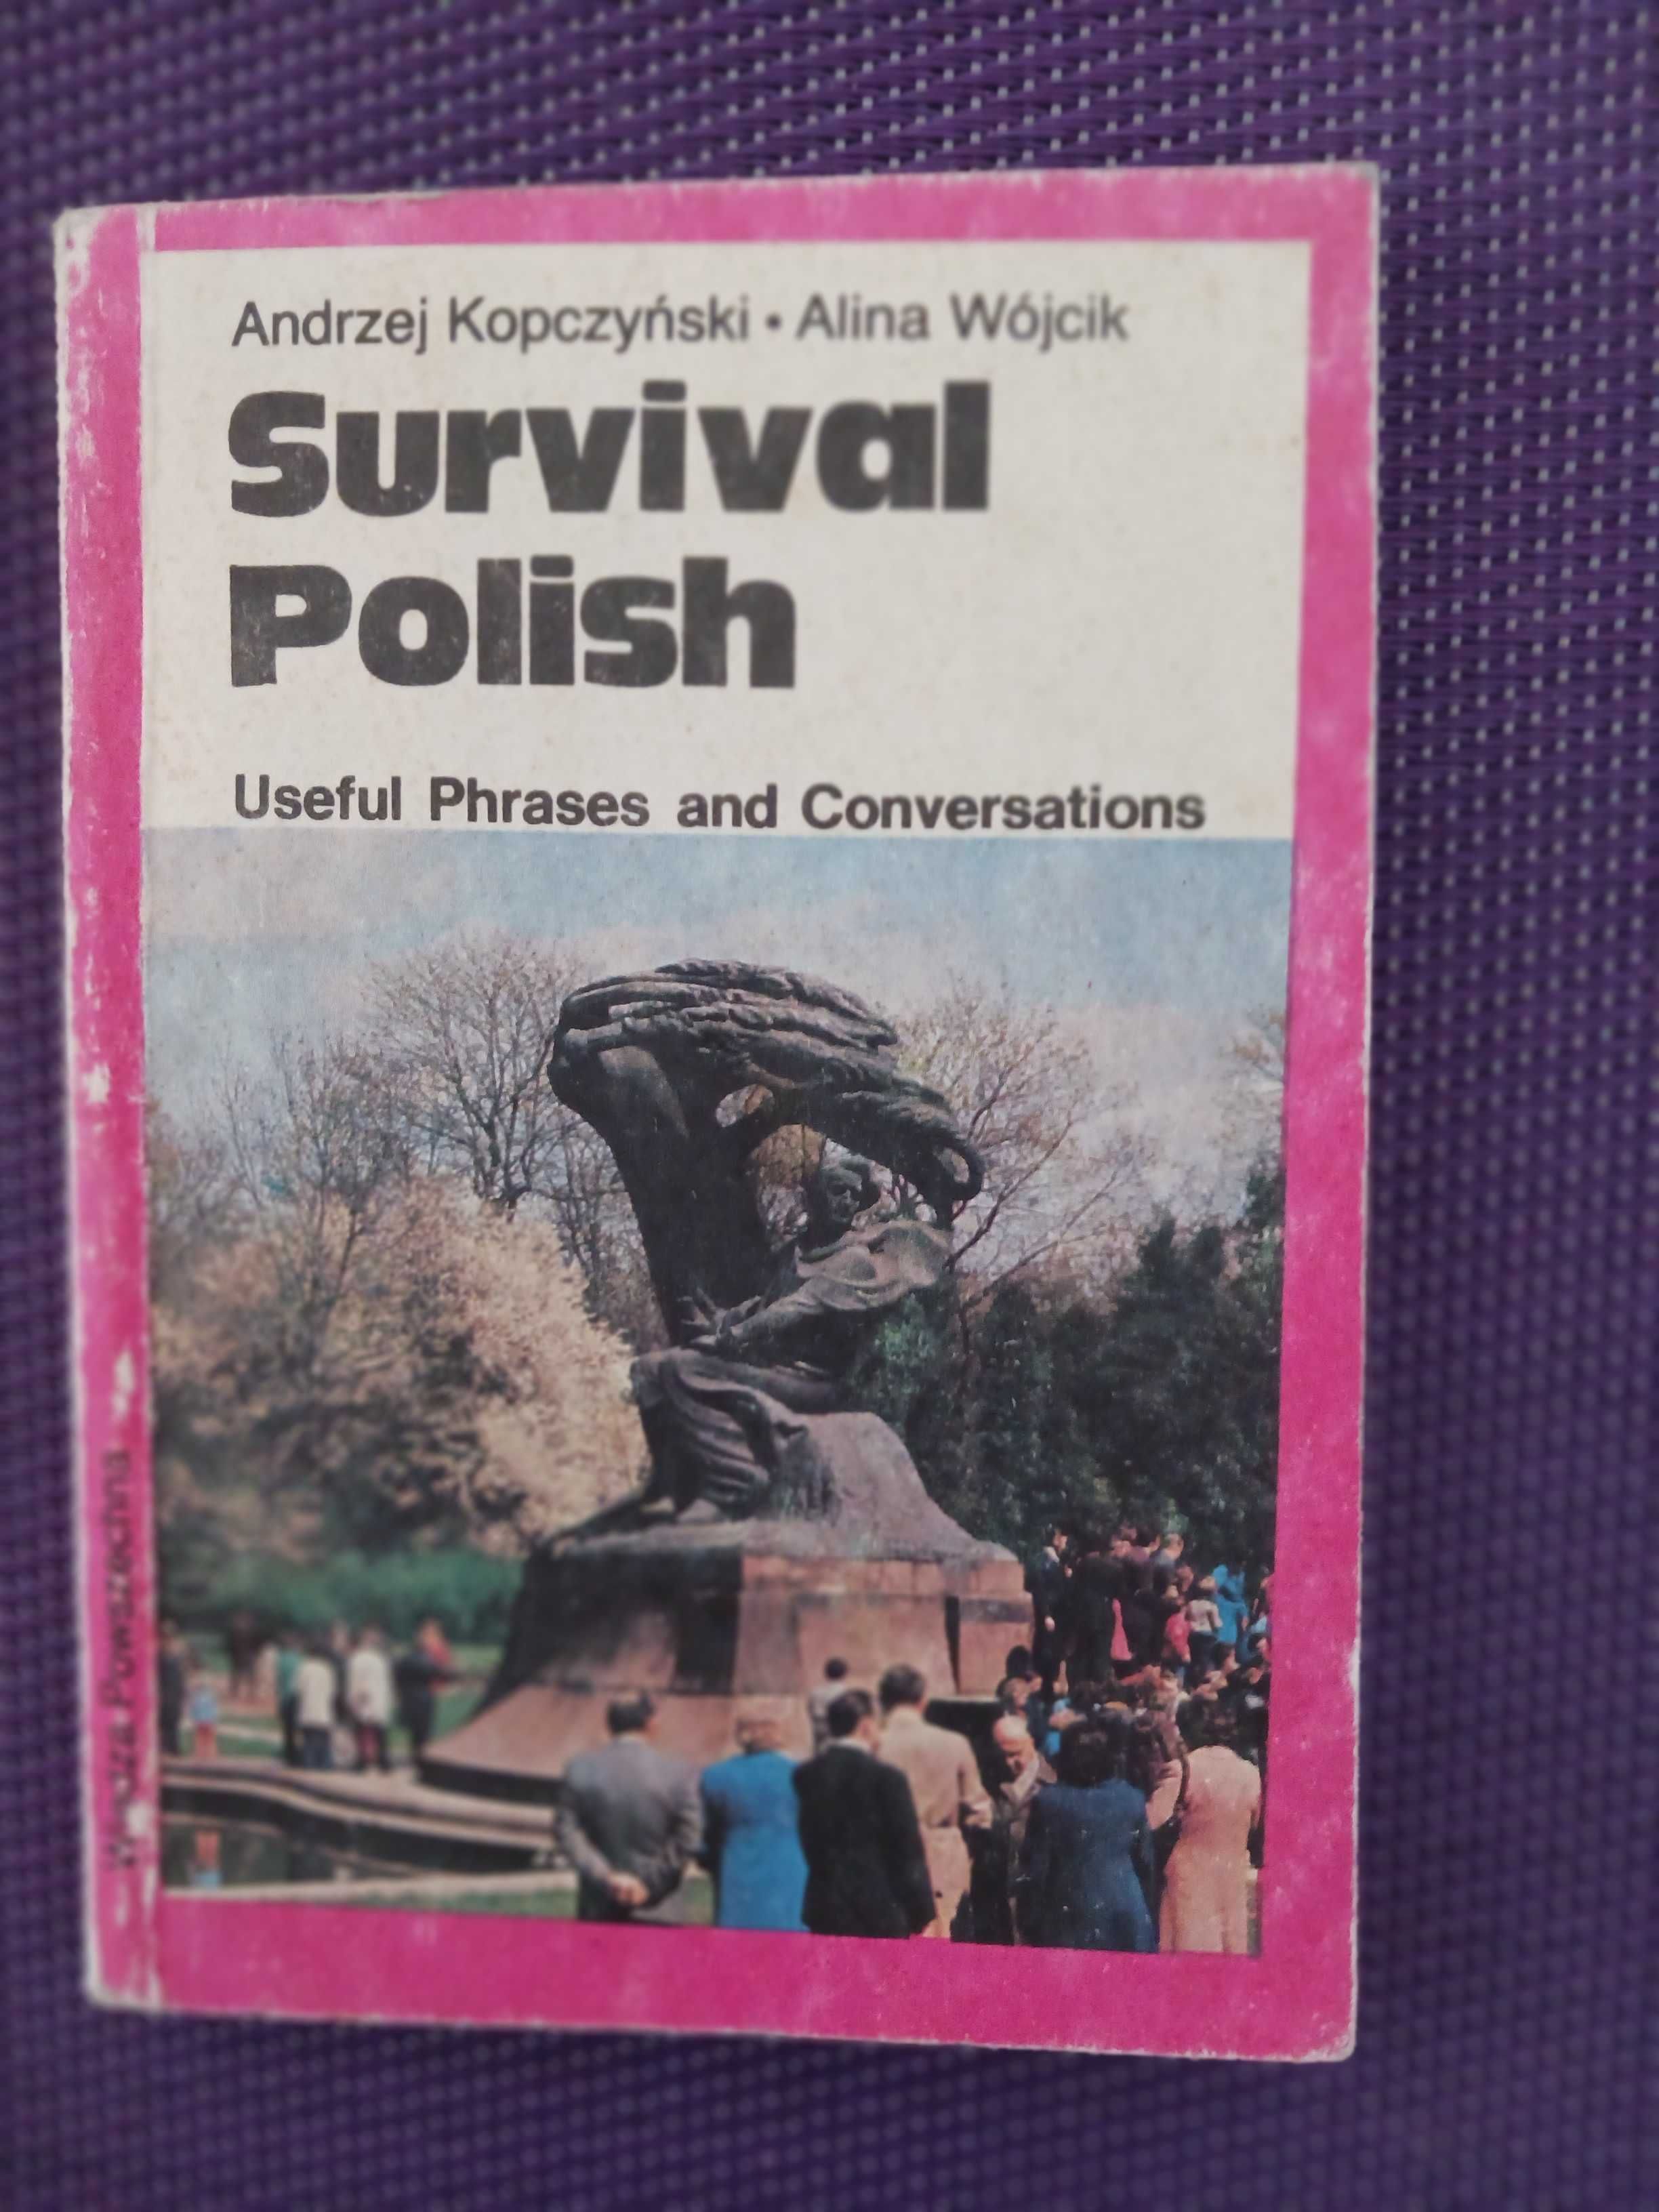 "Survival Polish" Andrzej Kopczyński, Alina Wójcik